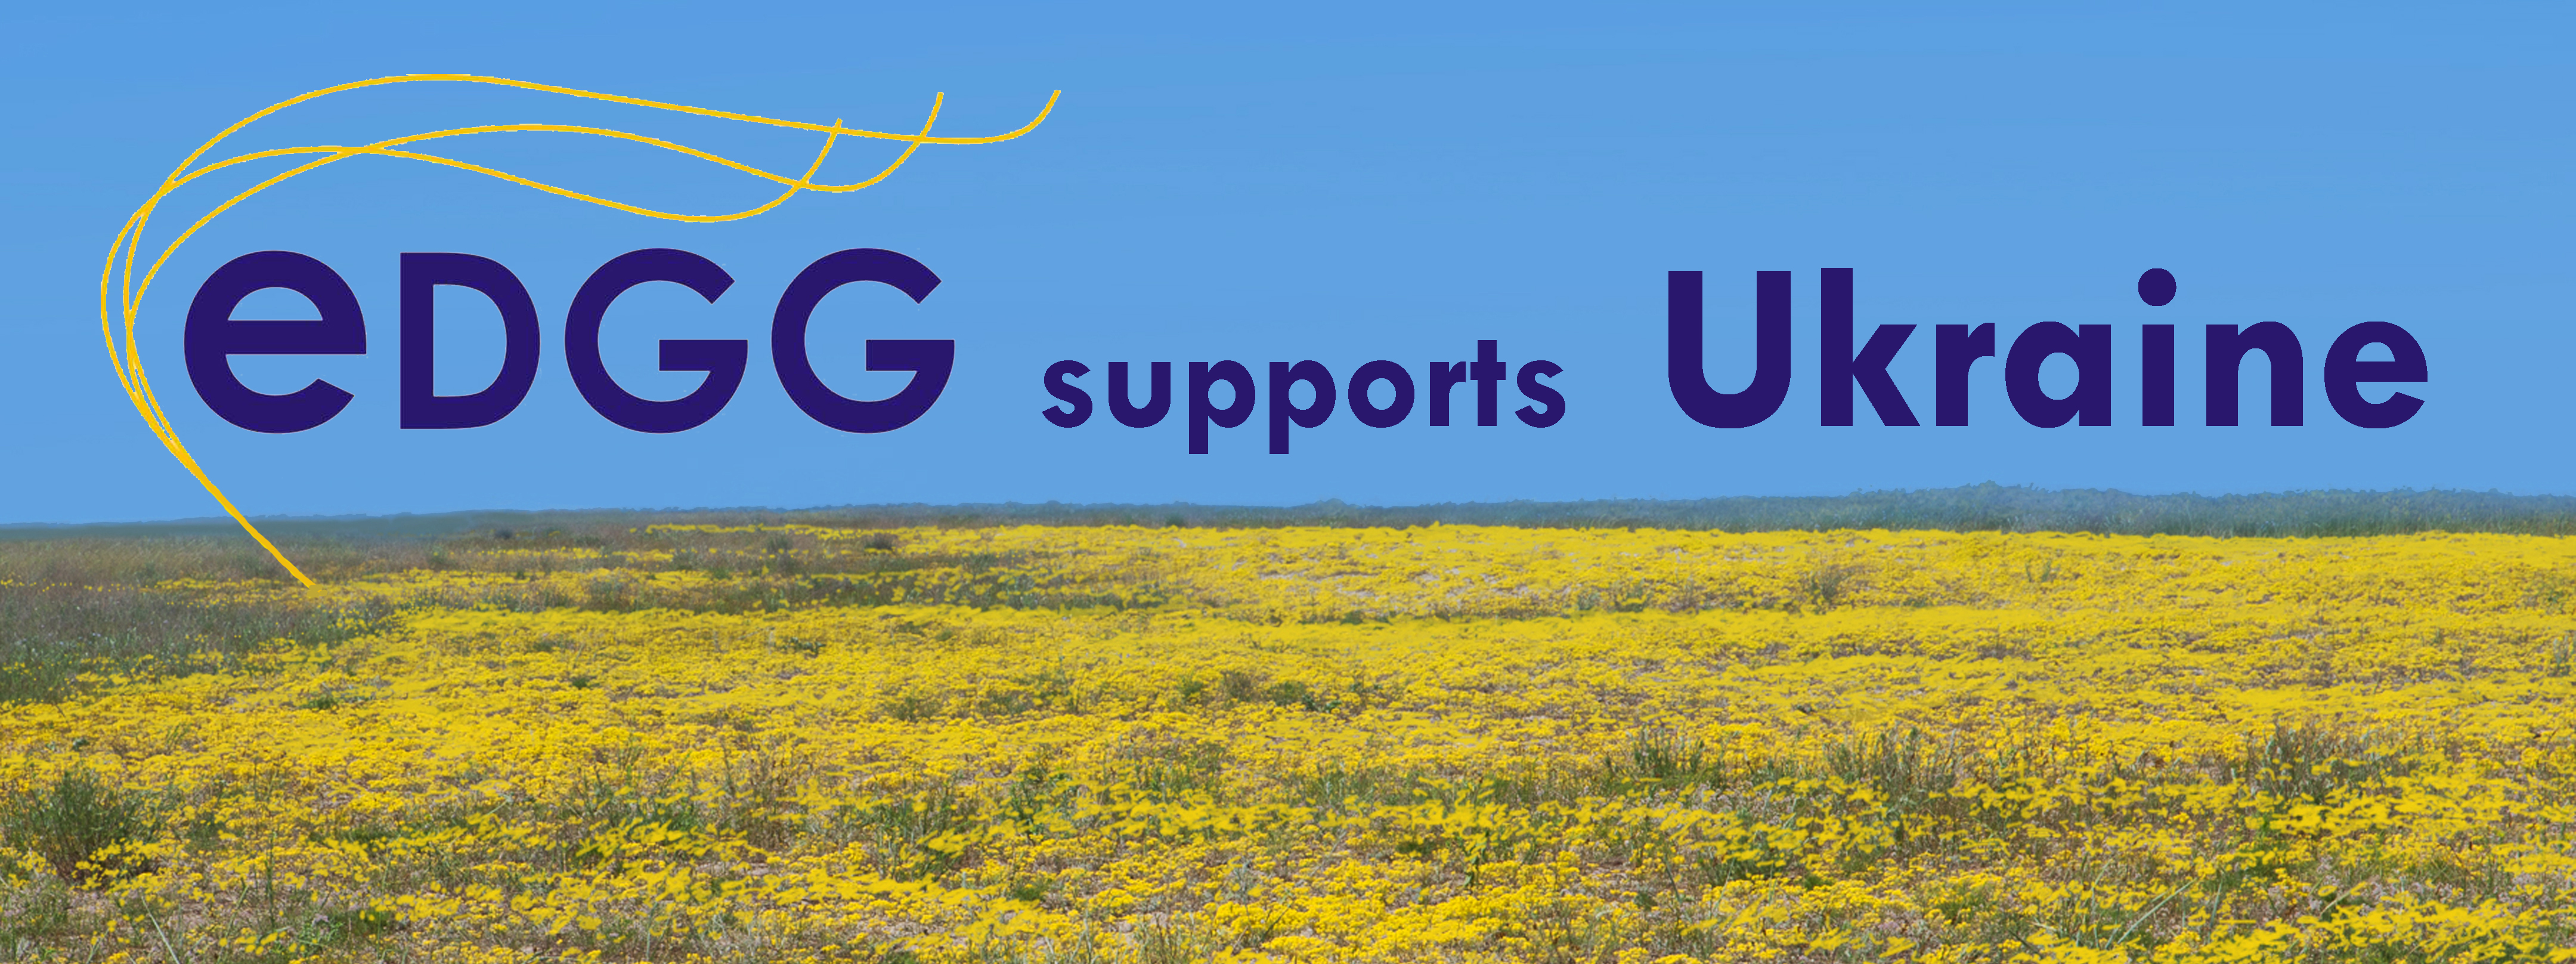 EDGG_supports_Ukraine